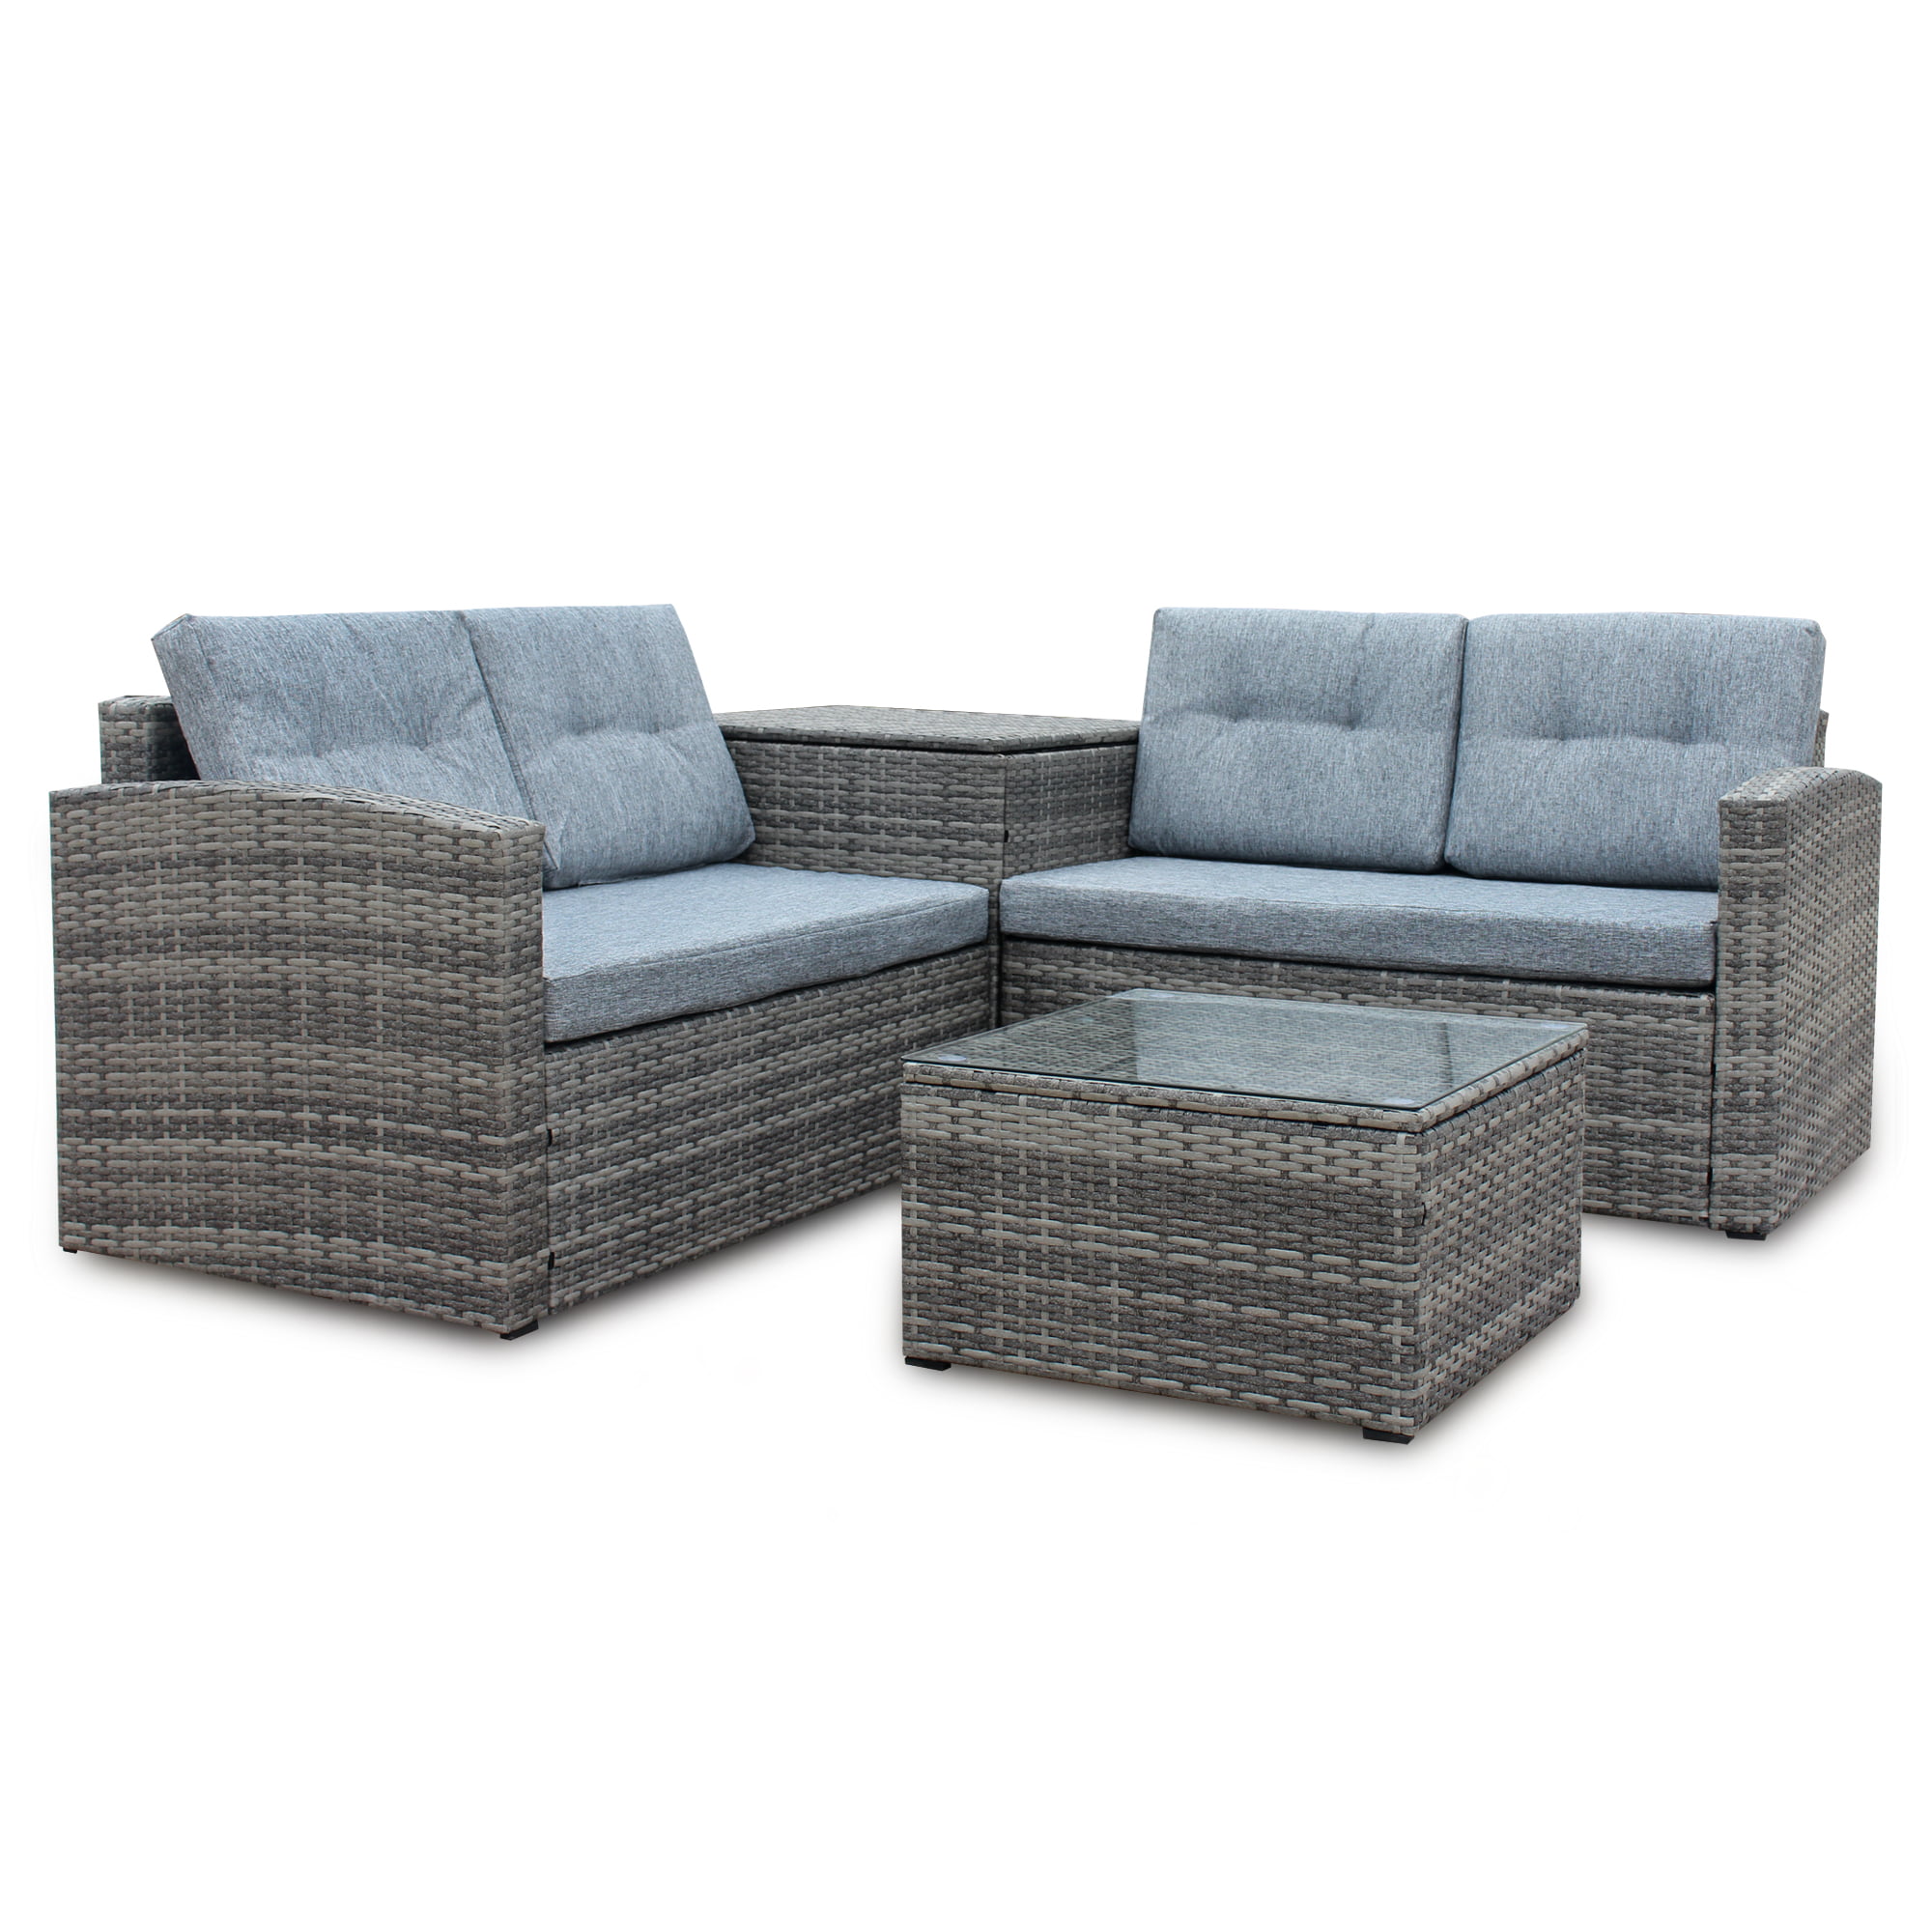 CLEARANCE! Outdoor Patio Furniture Sets, SEGMART 4 Pieces Outdoor Wicker Patio Furniture Set ...